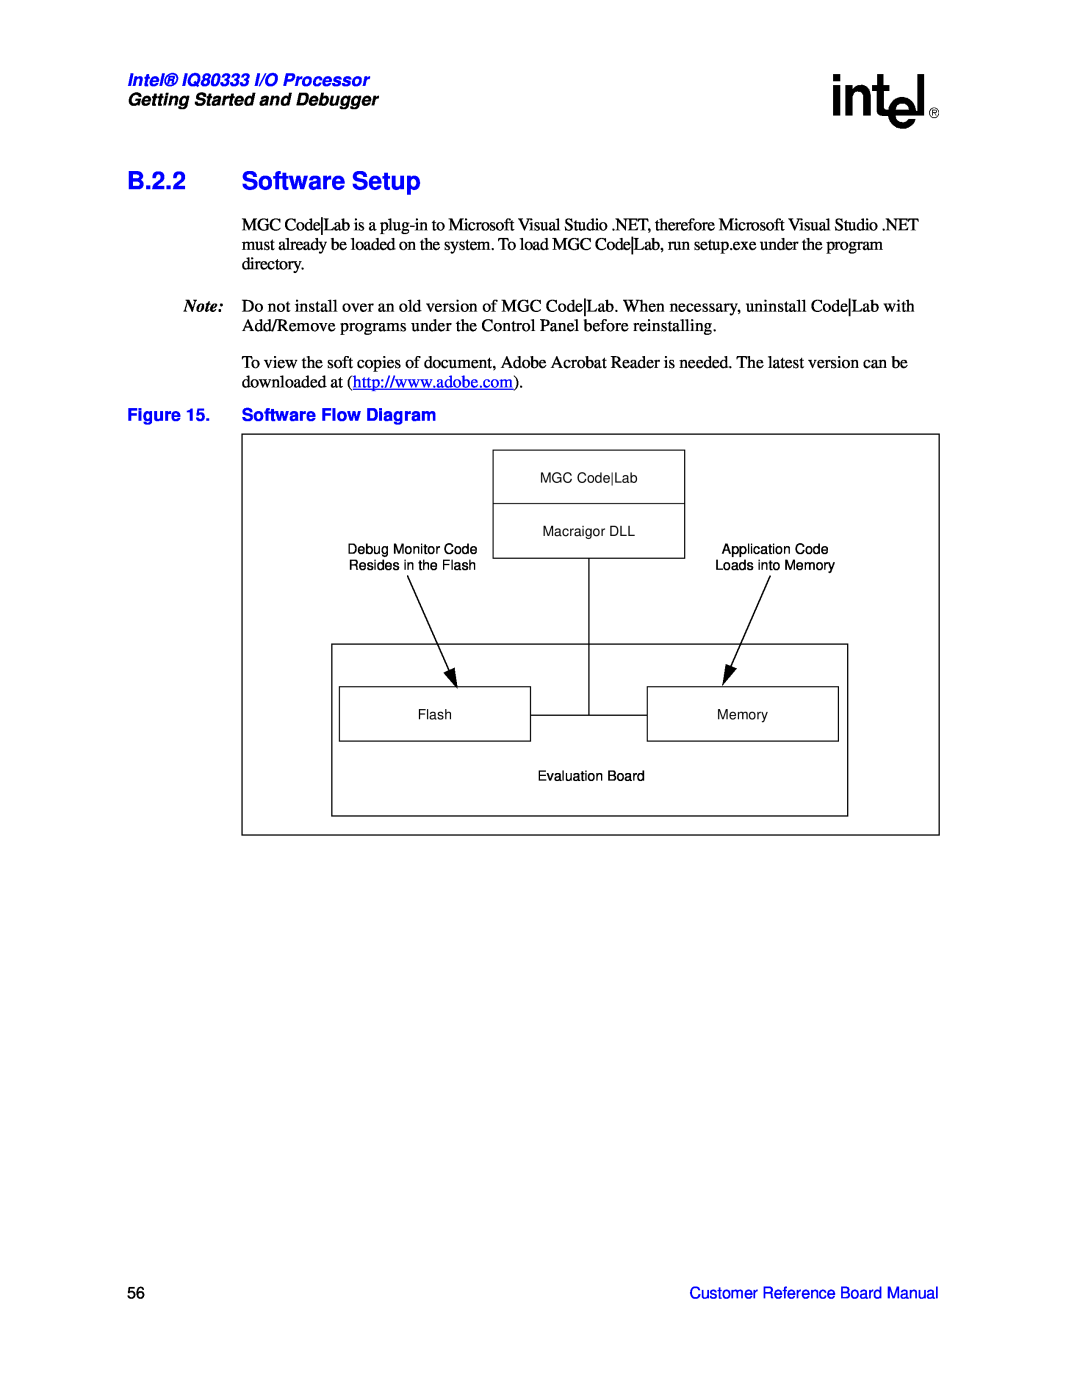 Intel manual B.2.2 Software Setup, Software Flow Diagram, Intel IQ80333 I/O Processor, Getting Started and Debugger 